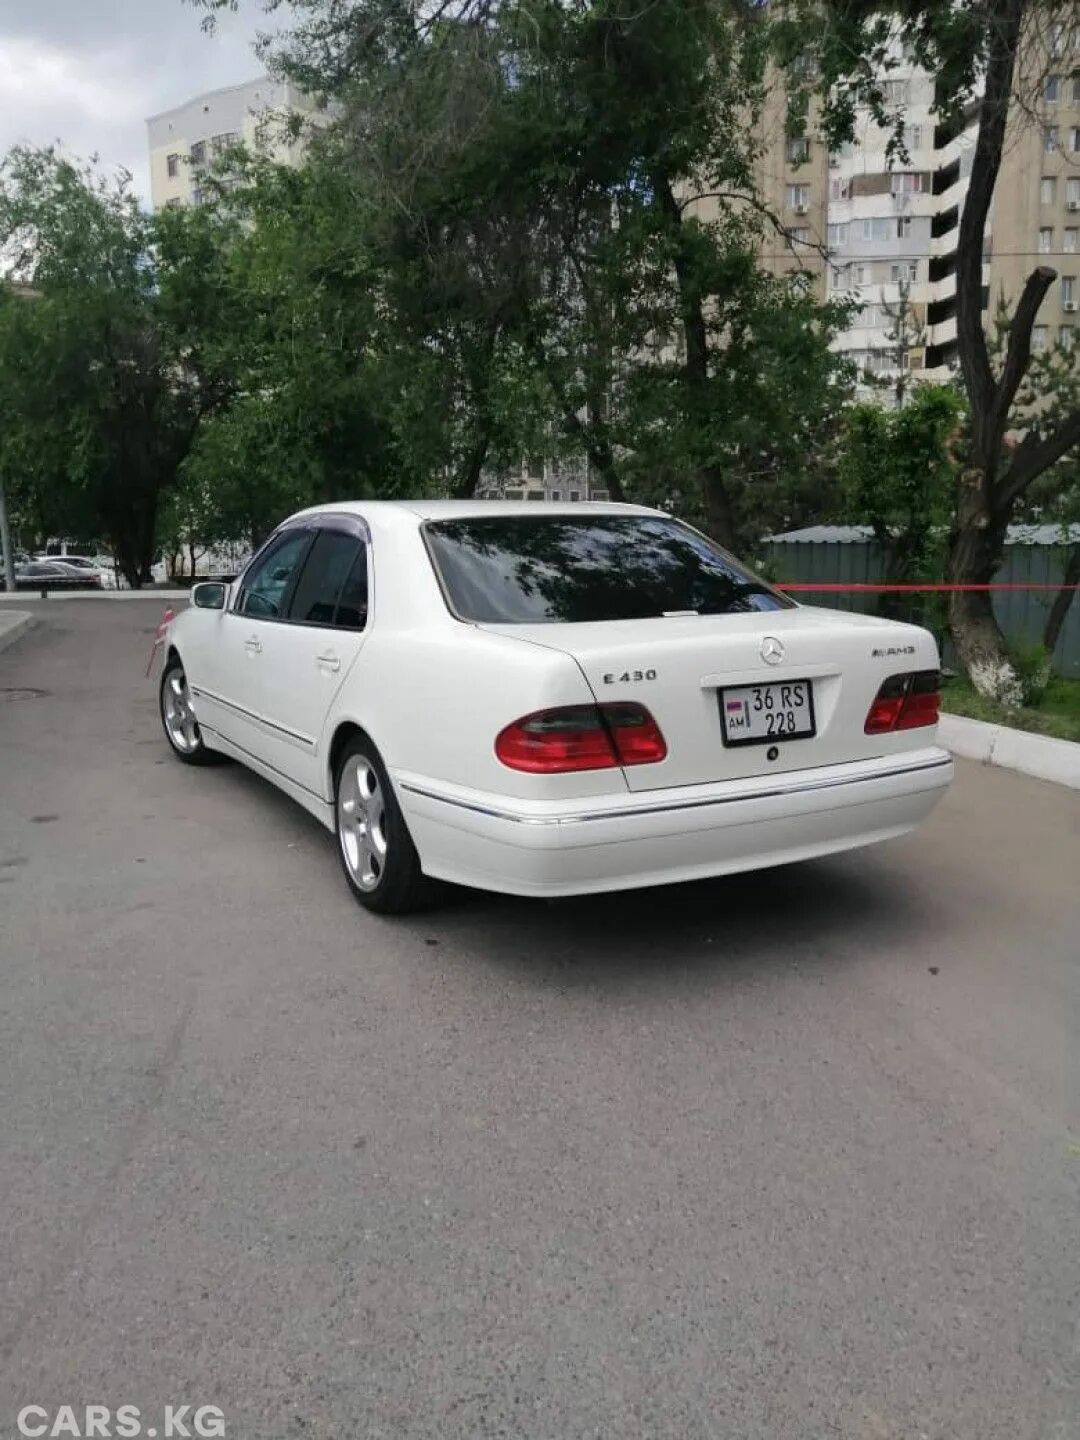 Мерседес 210 2001г. Мерс 210 кузов 2001. Мерседес w210 Бишкек. W210 Mercedes Кыргызстан.